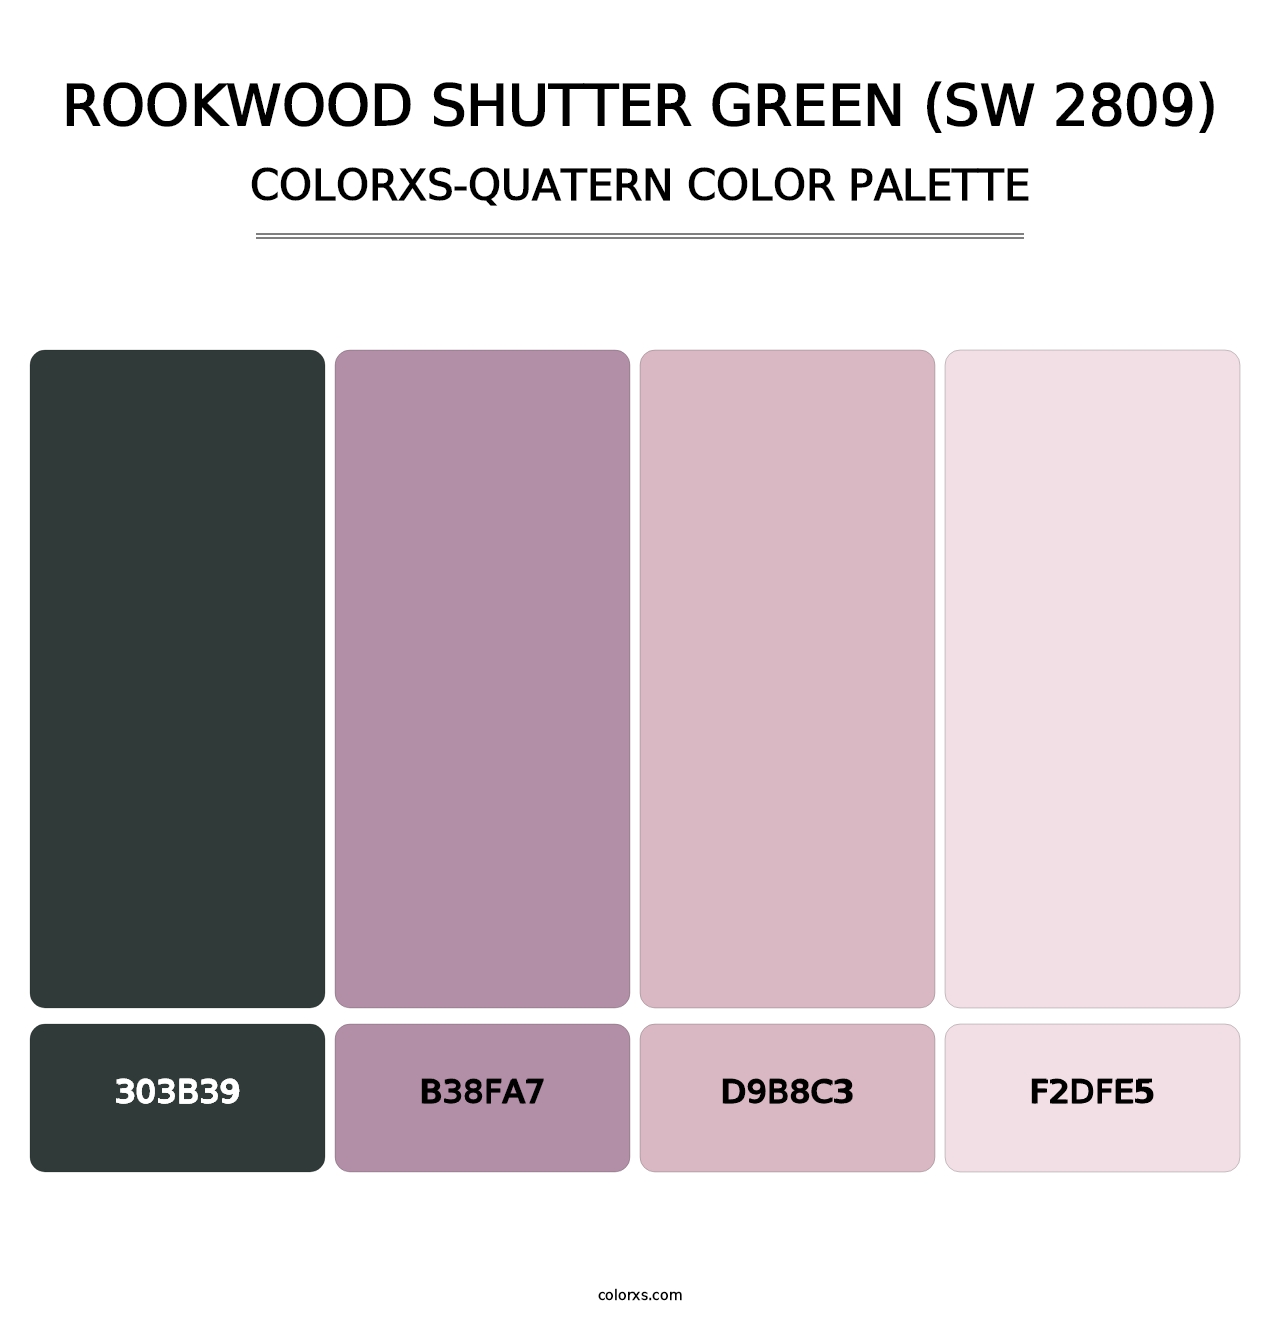 Rookwood Shutter Green (SW 2809) - Colorxs Quatern Palette